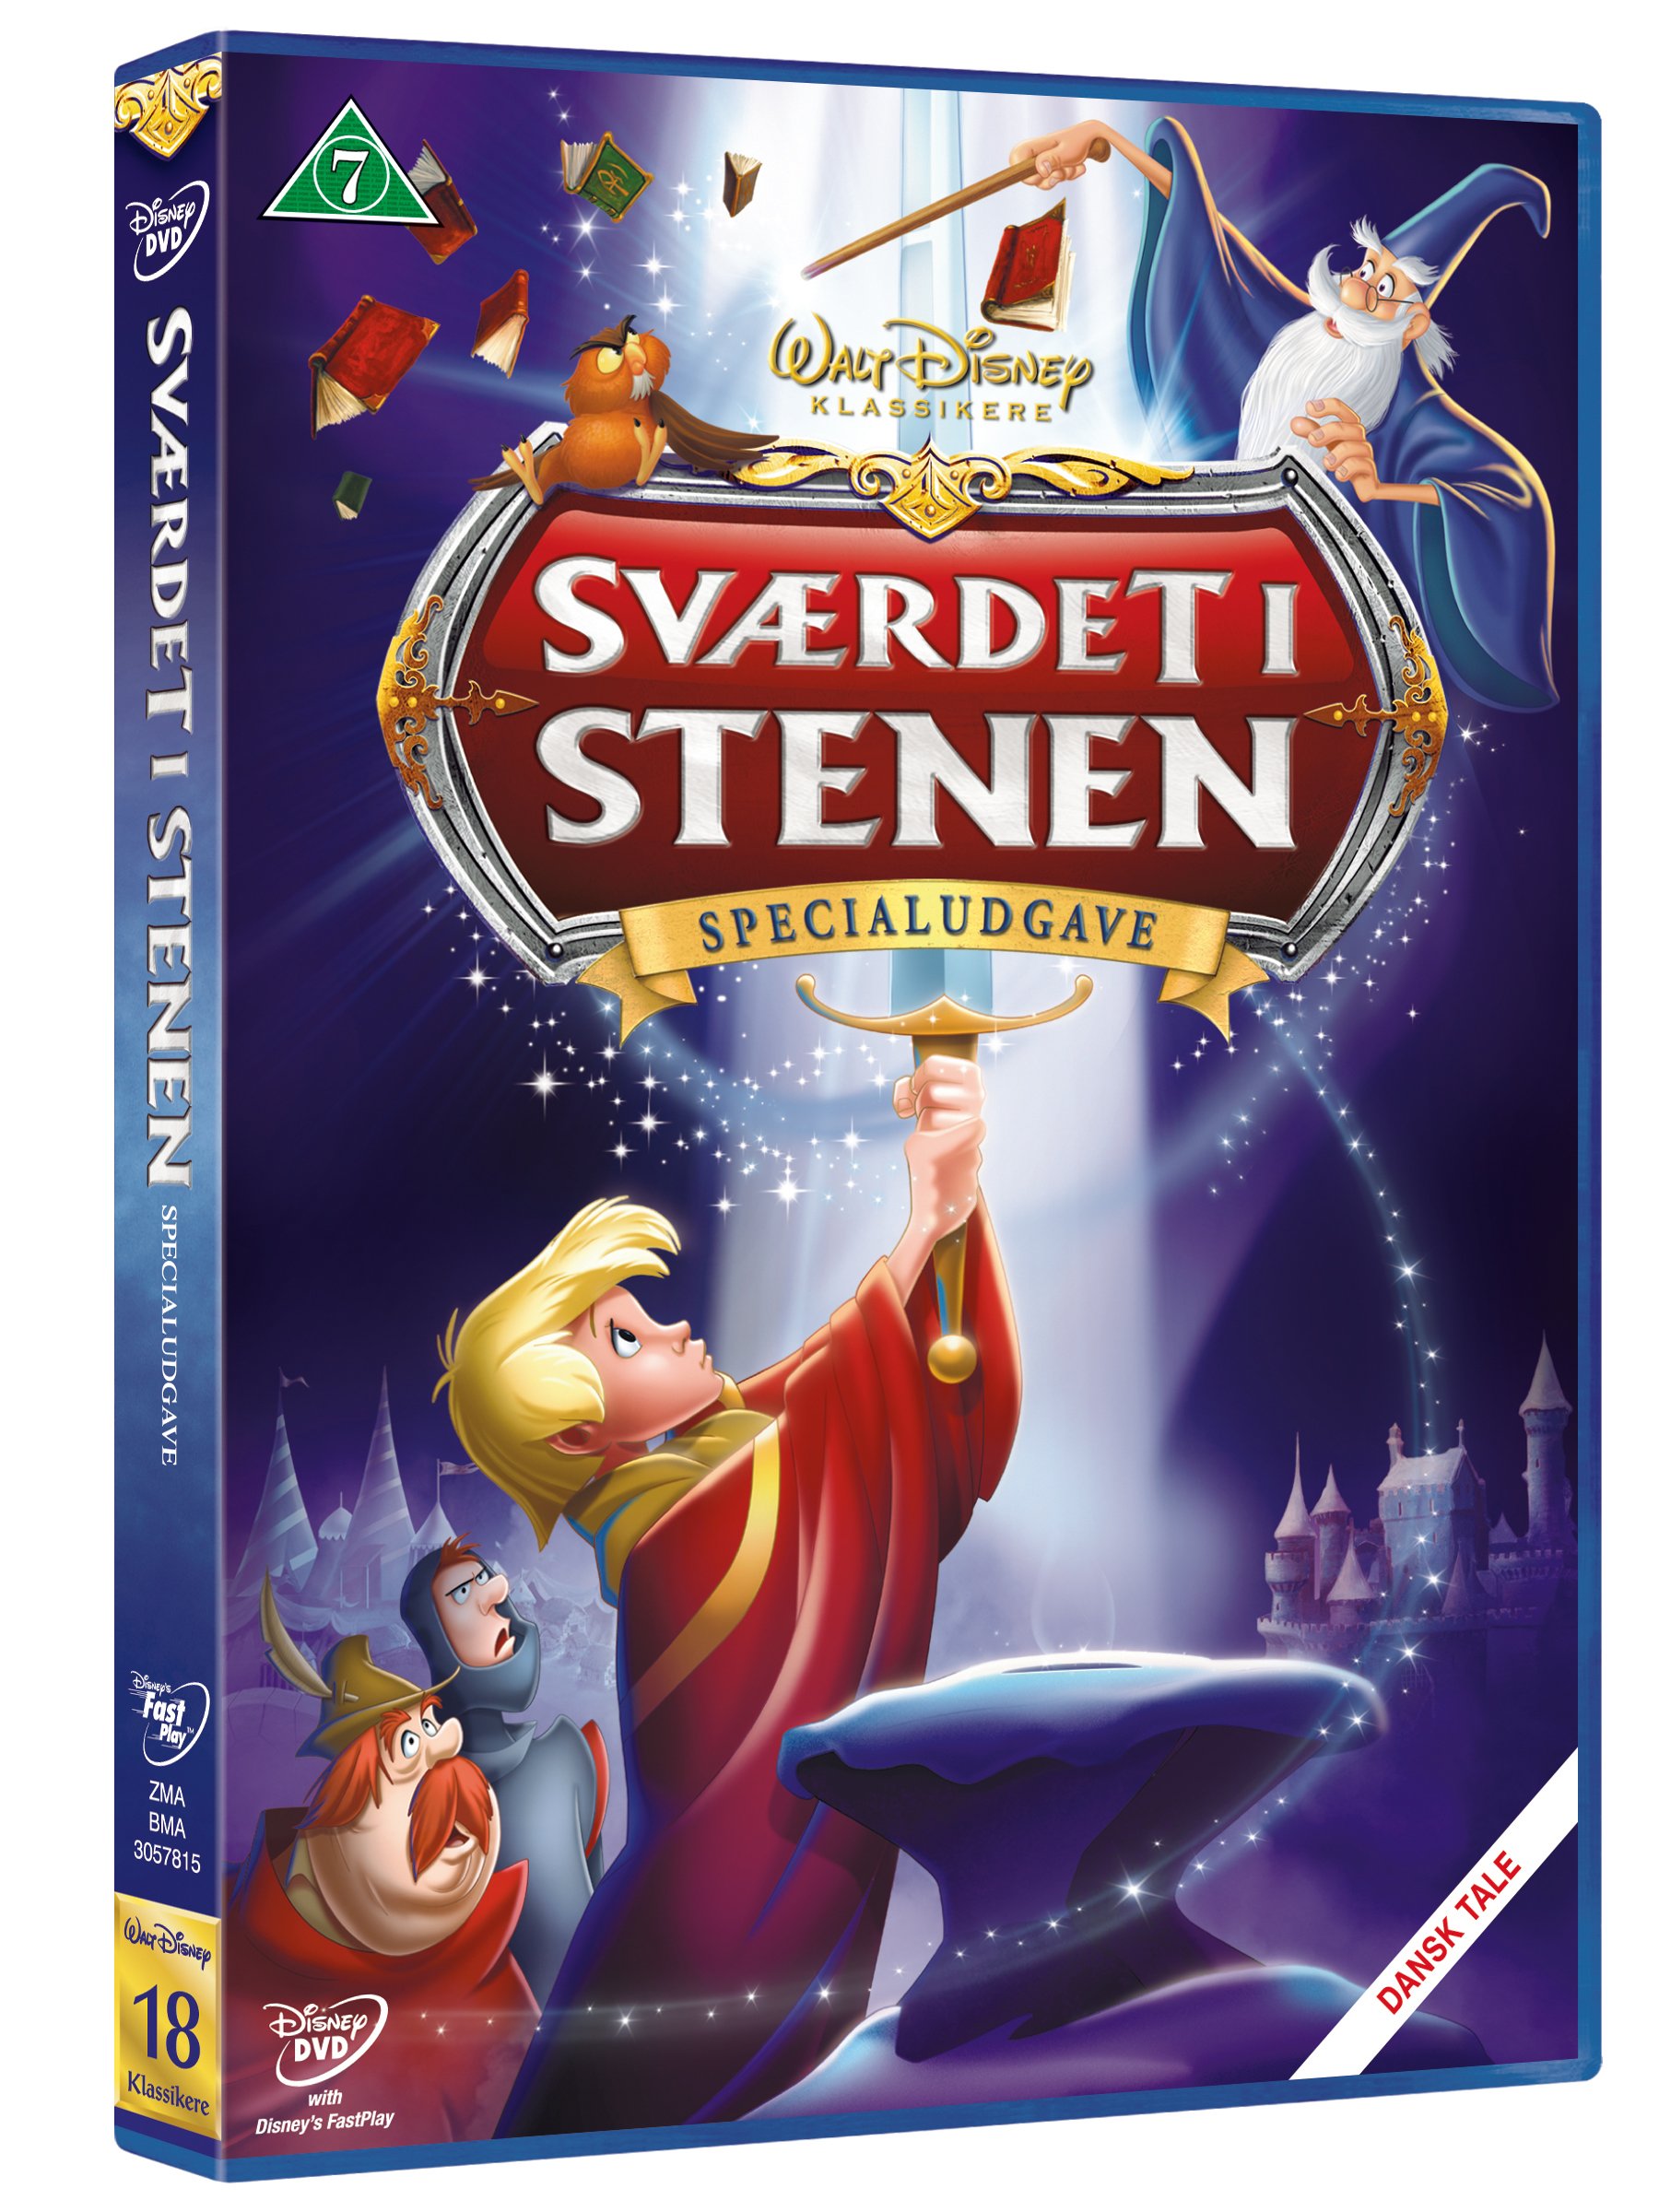 Disneys The Sword in the Stone - DVD